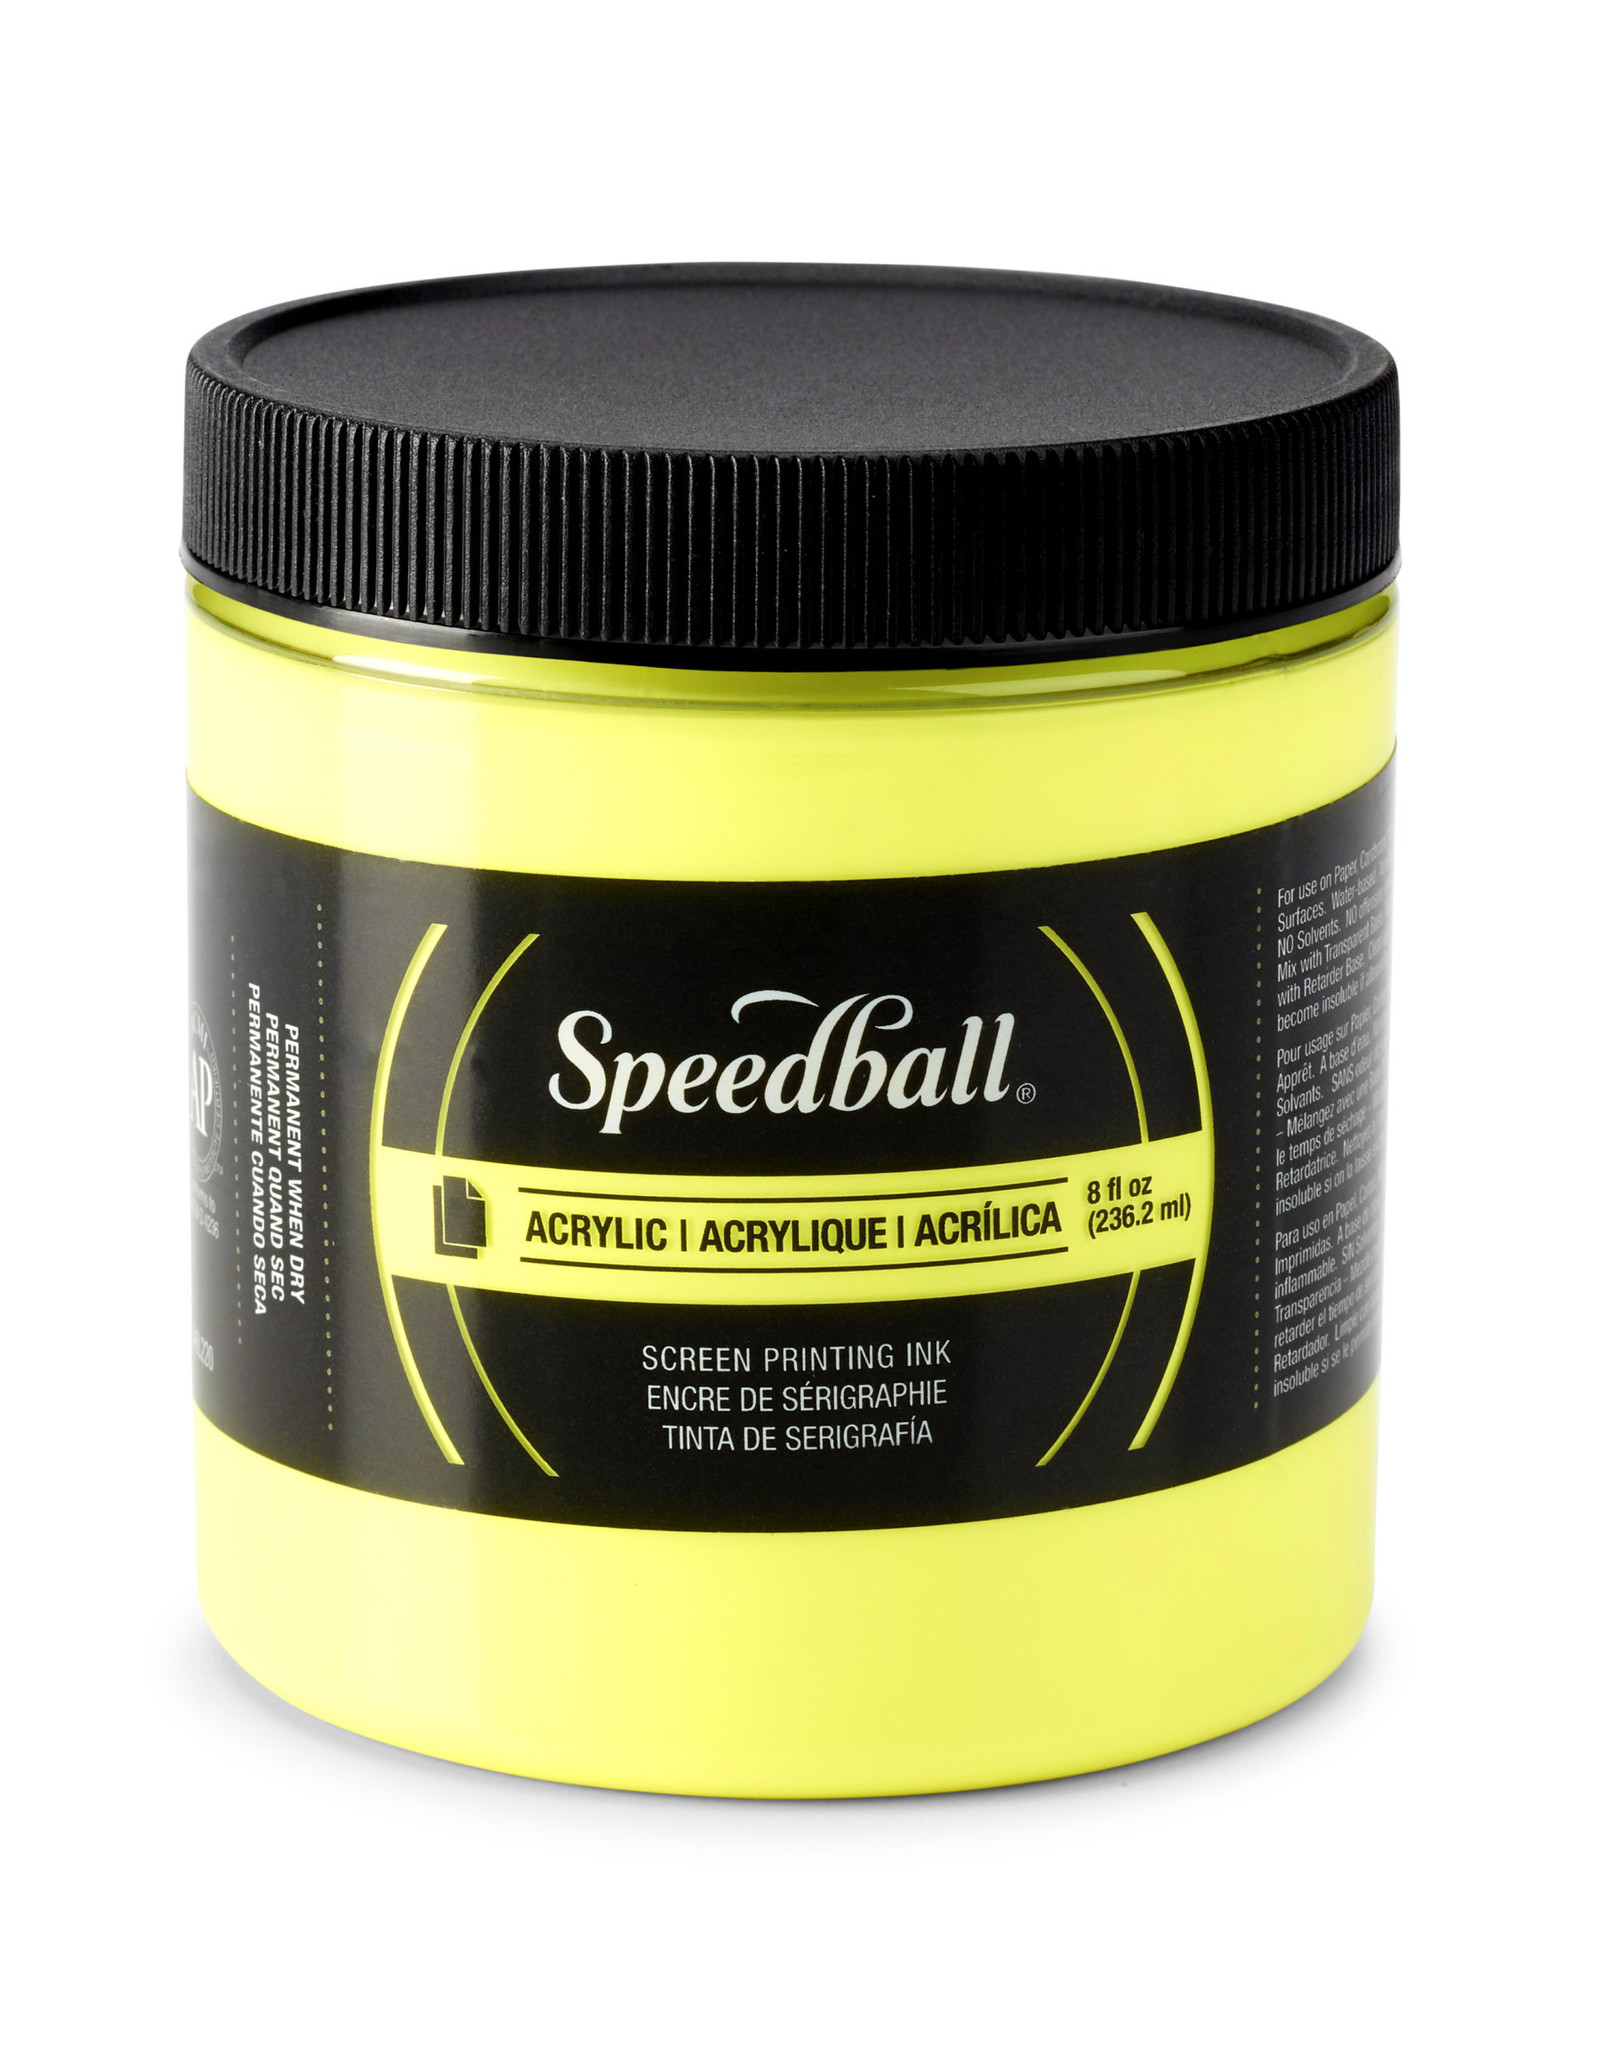 SPEEDBALL ART PRODUCTS Speedball Acrylic Screen Printing Ink, Fluorescent Yellow, 8oz